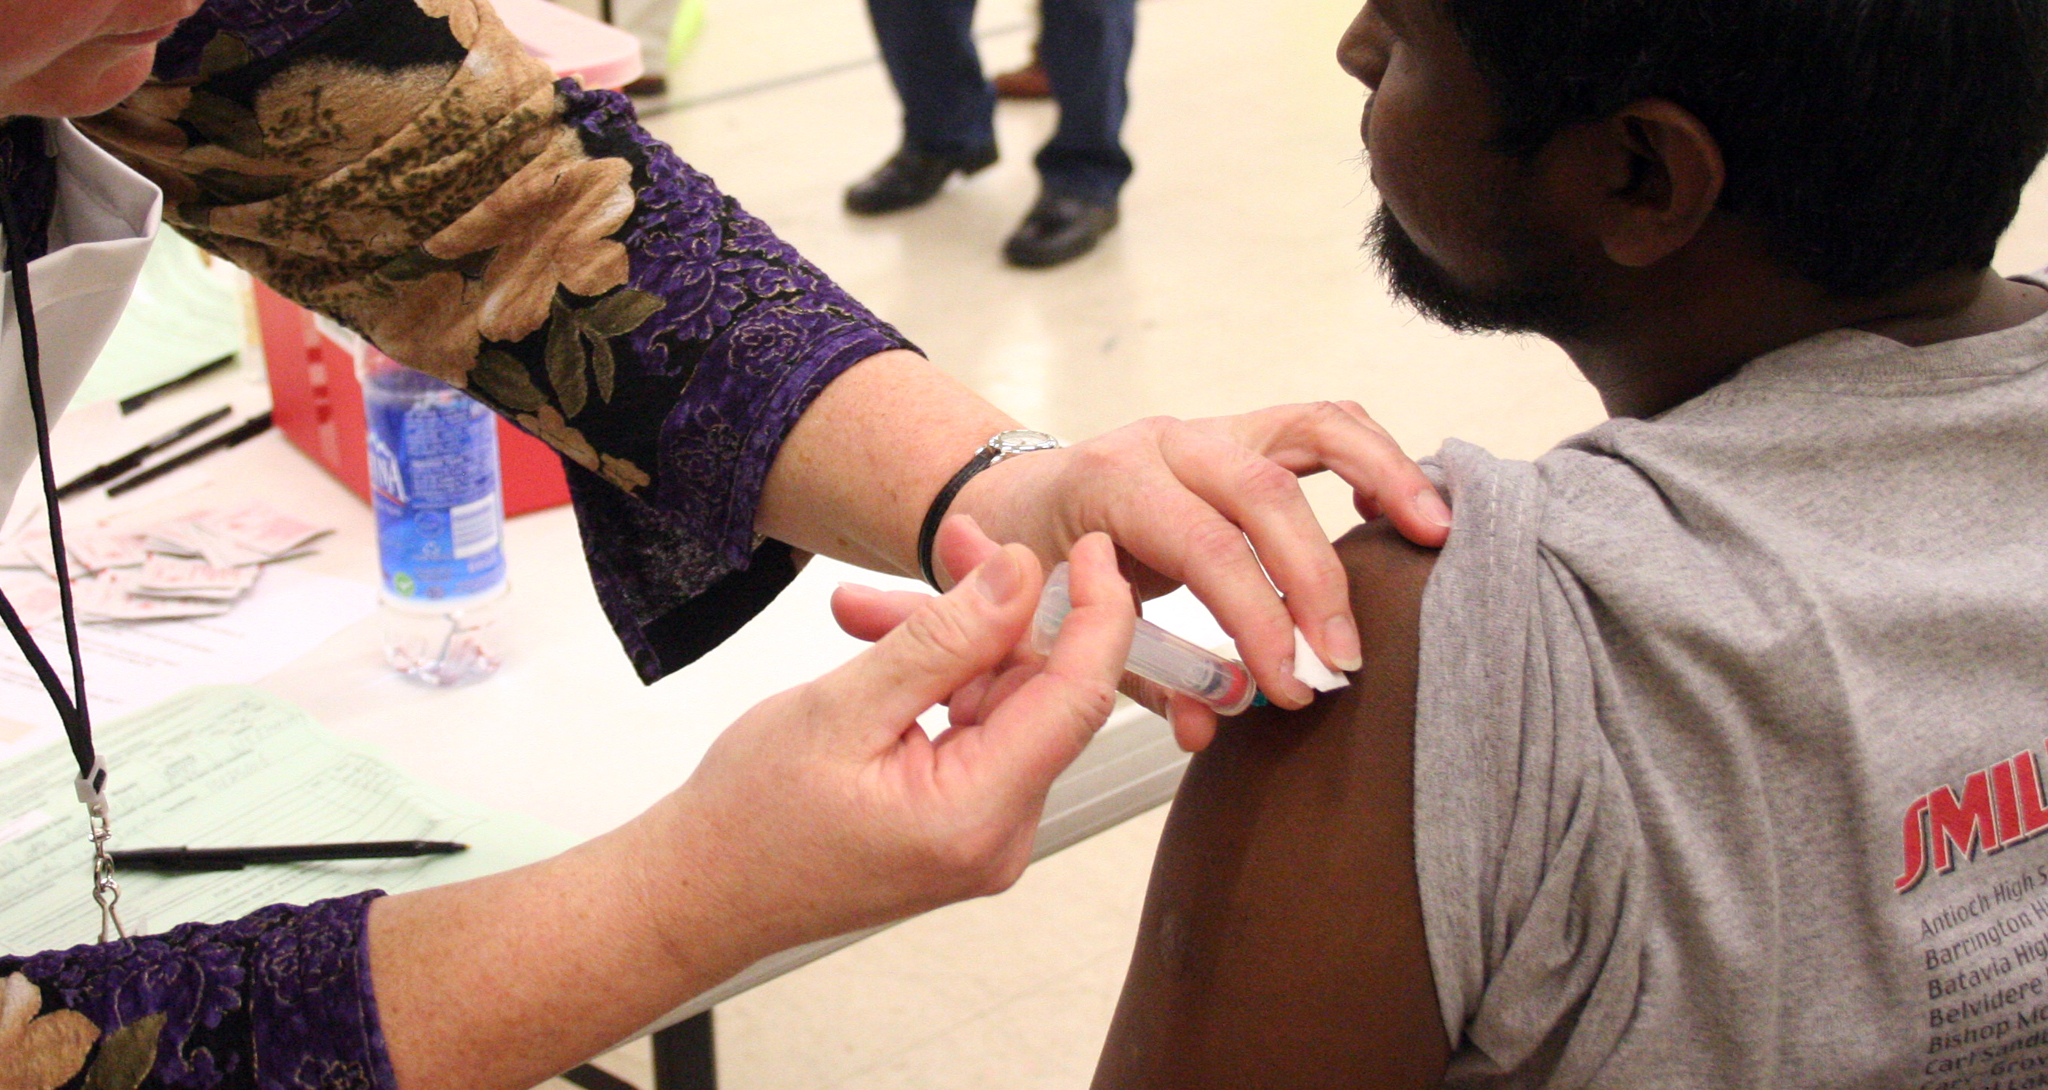 Provider administering a vaccine